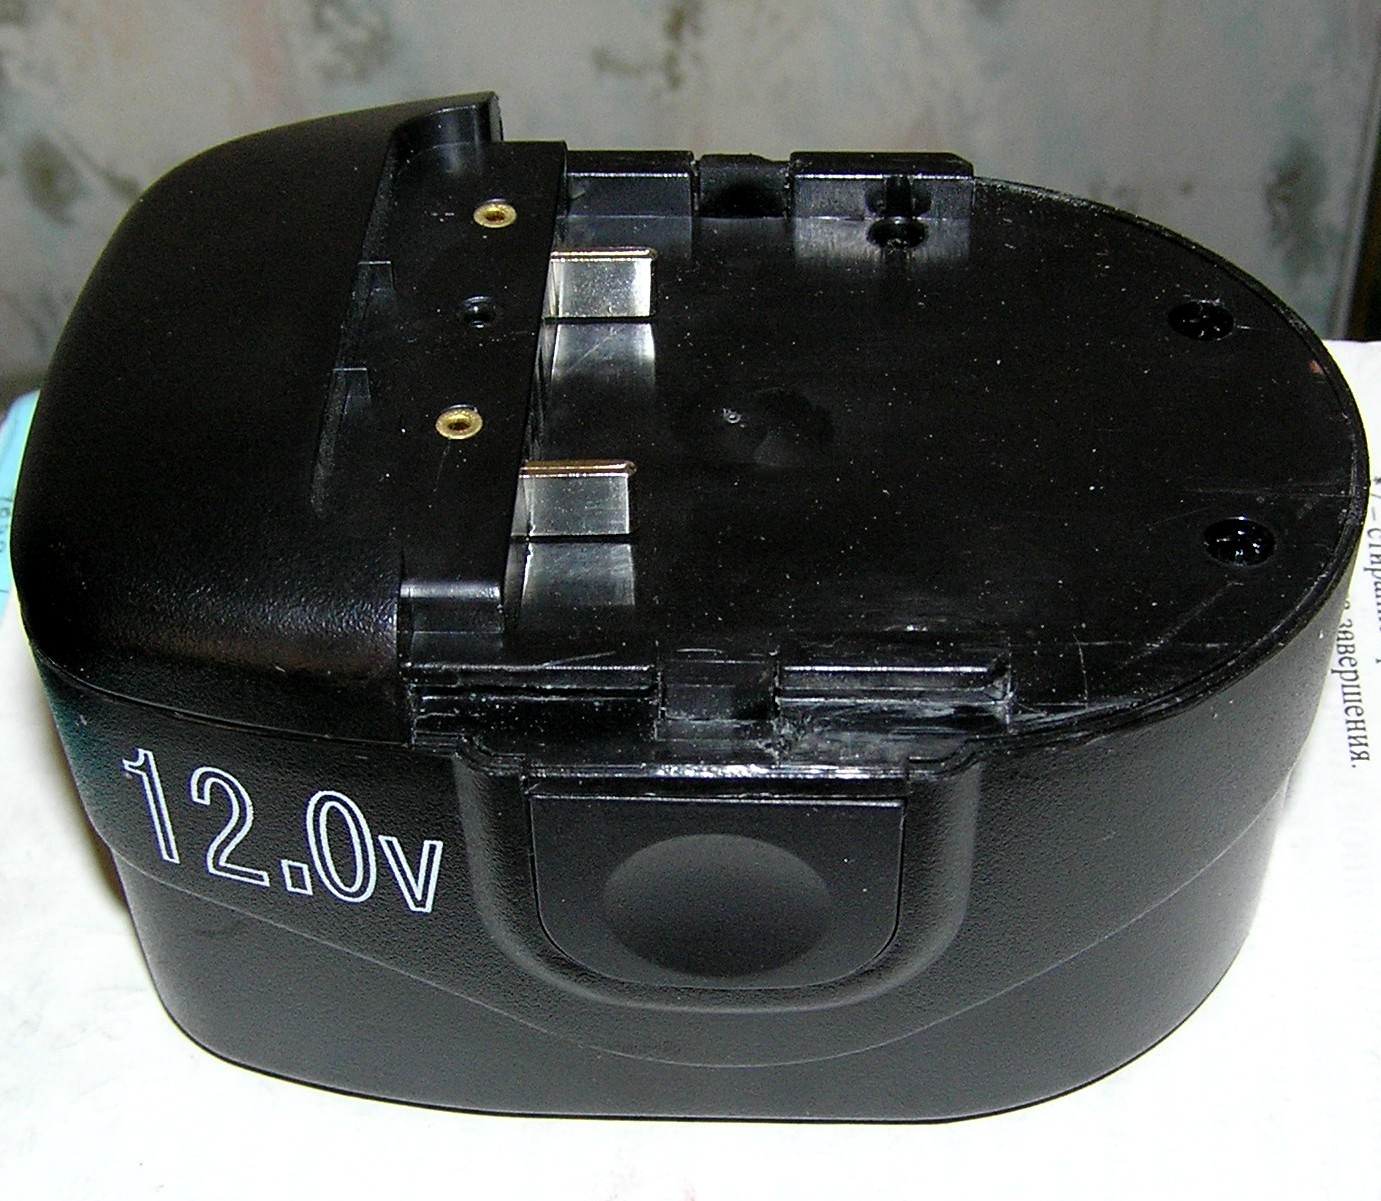 Рис. 2 Внешний вид аккумулятора для шуруповерта немецкой фирмы DWT.